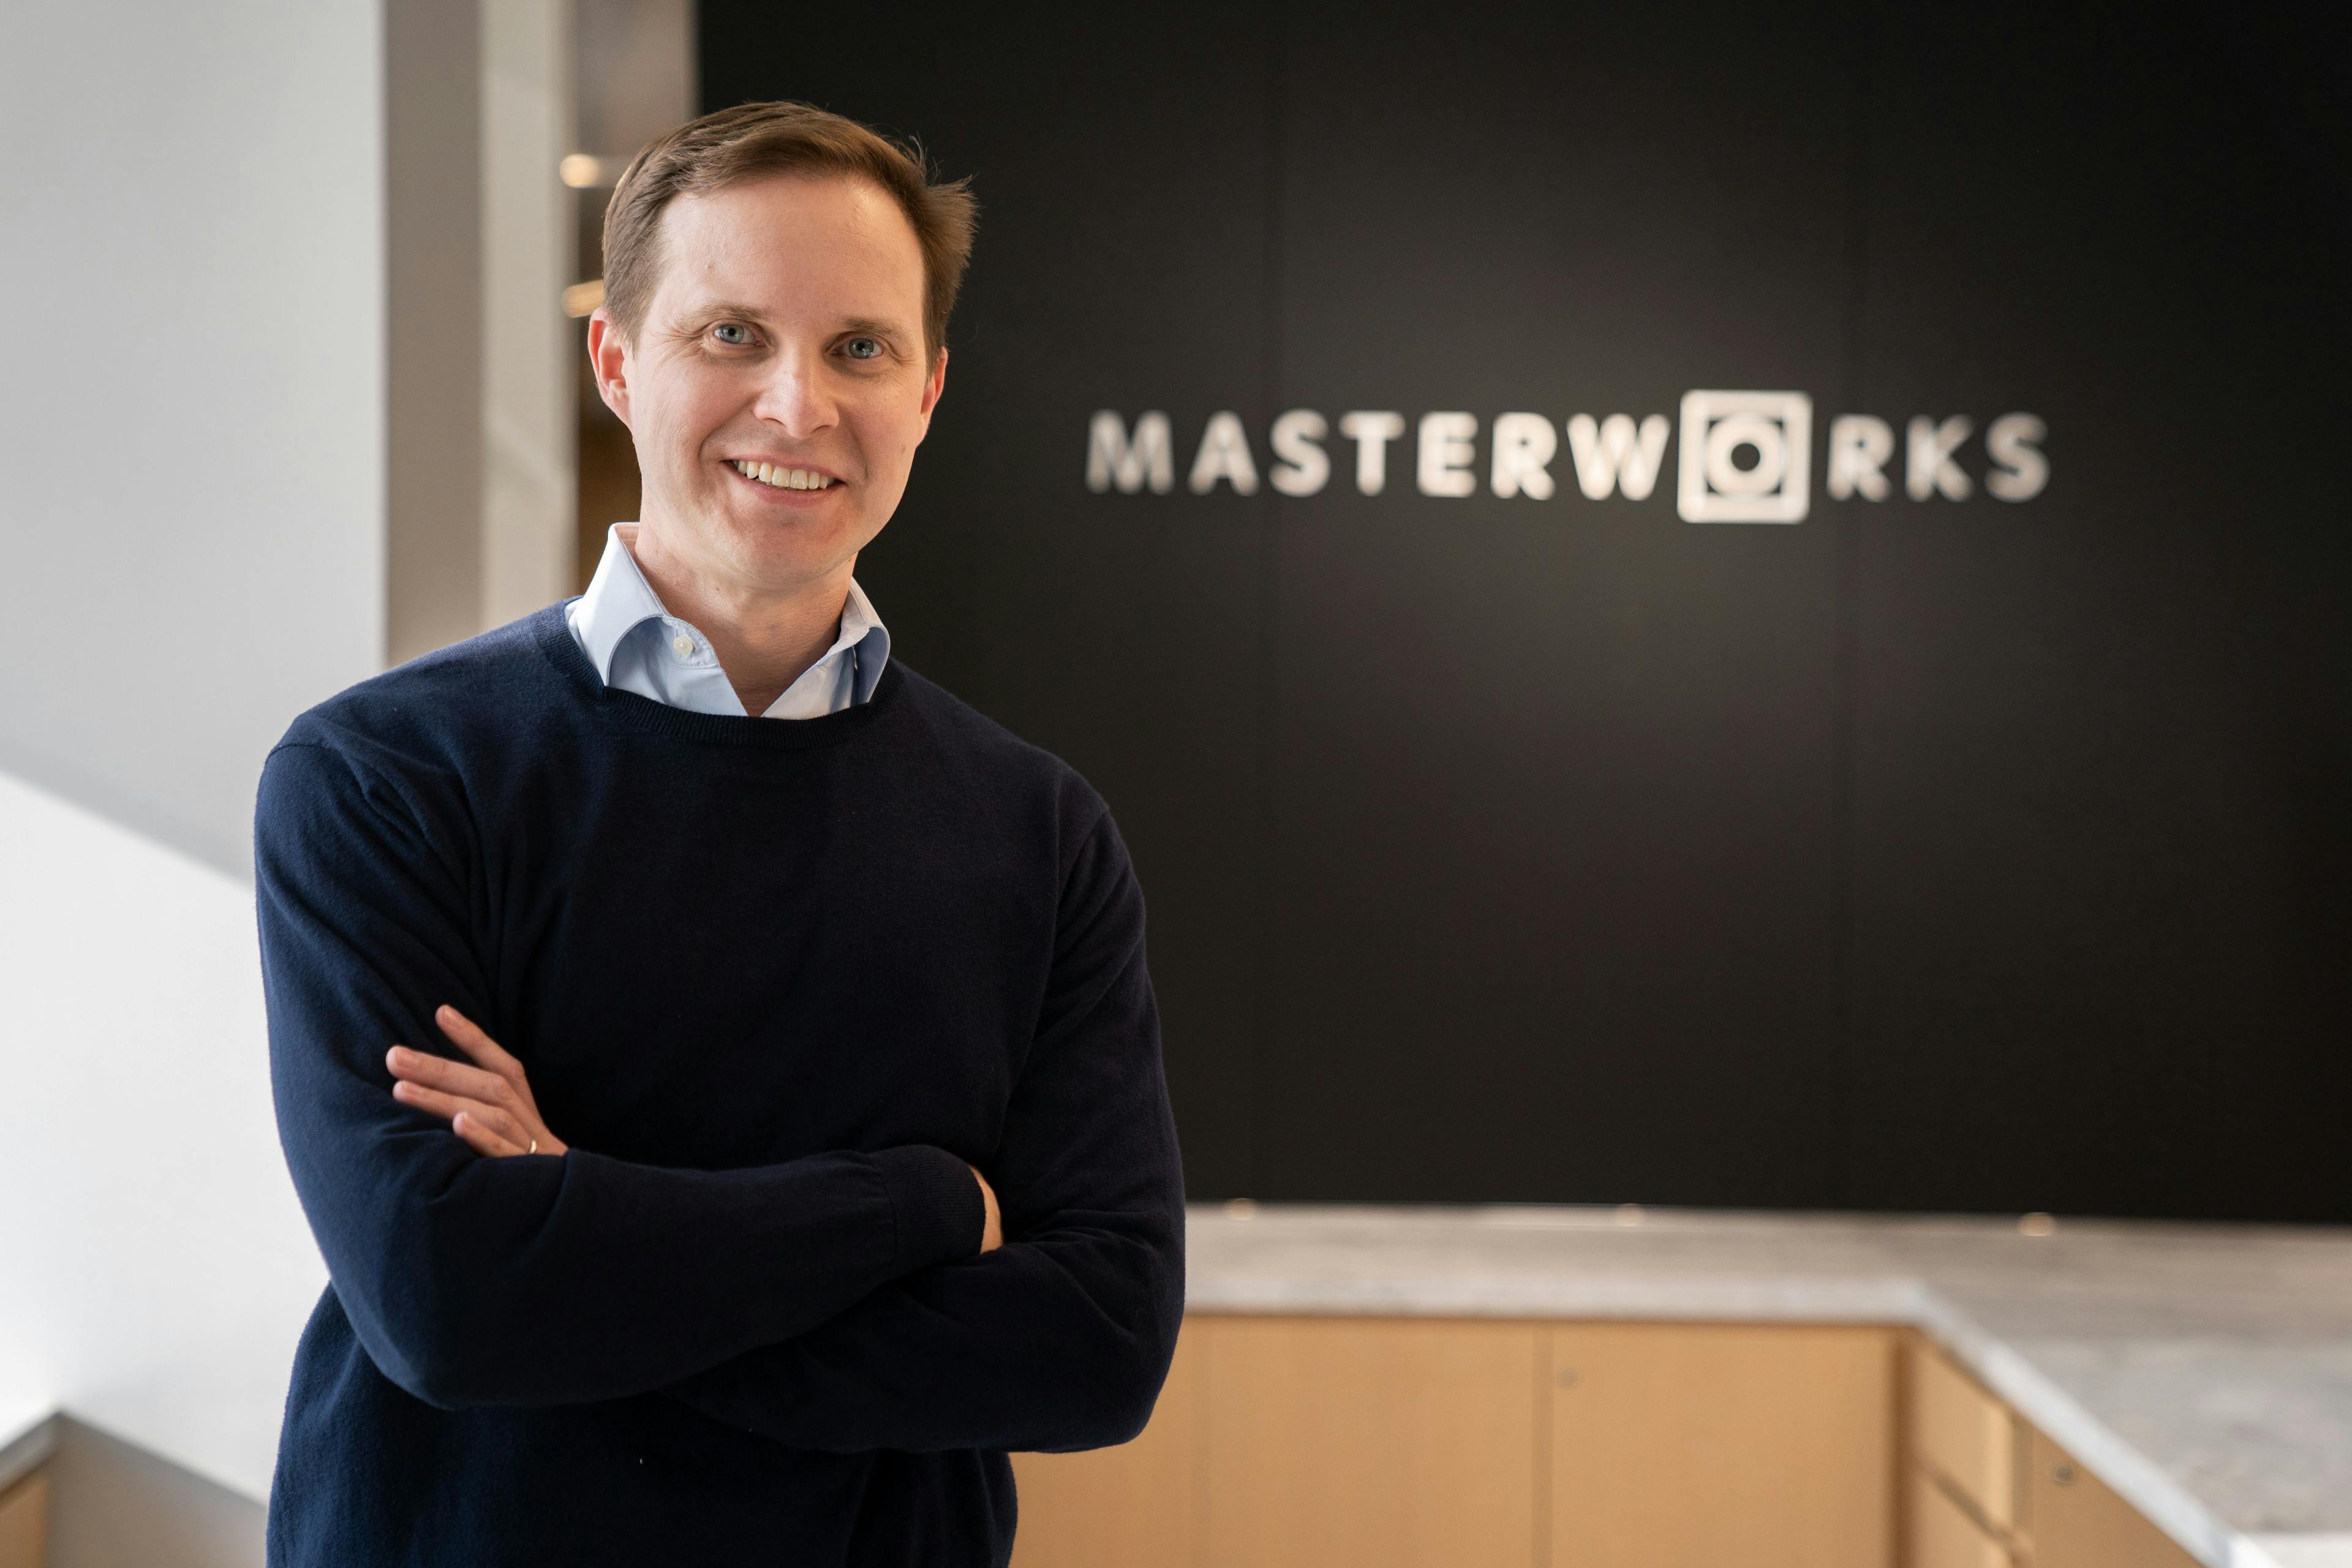 Masterworks CFO Nigel Glenday standing in front of the Masterworks logo